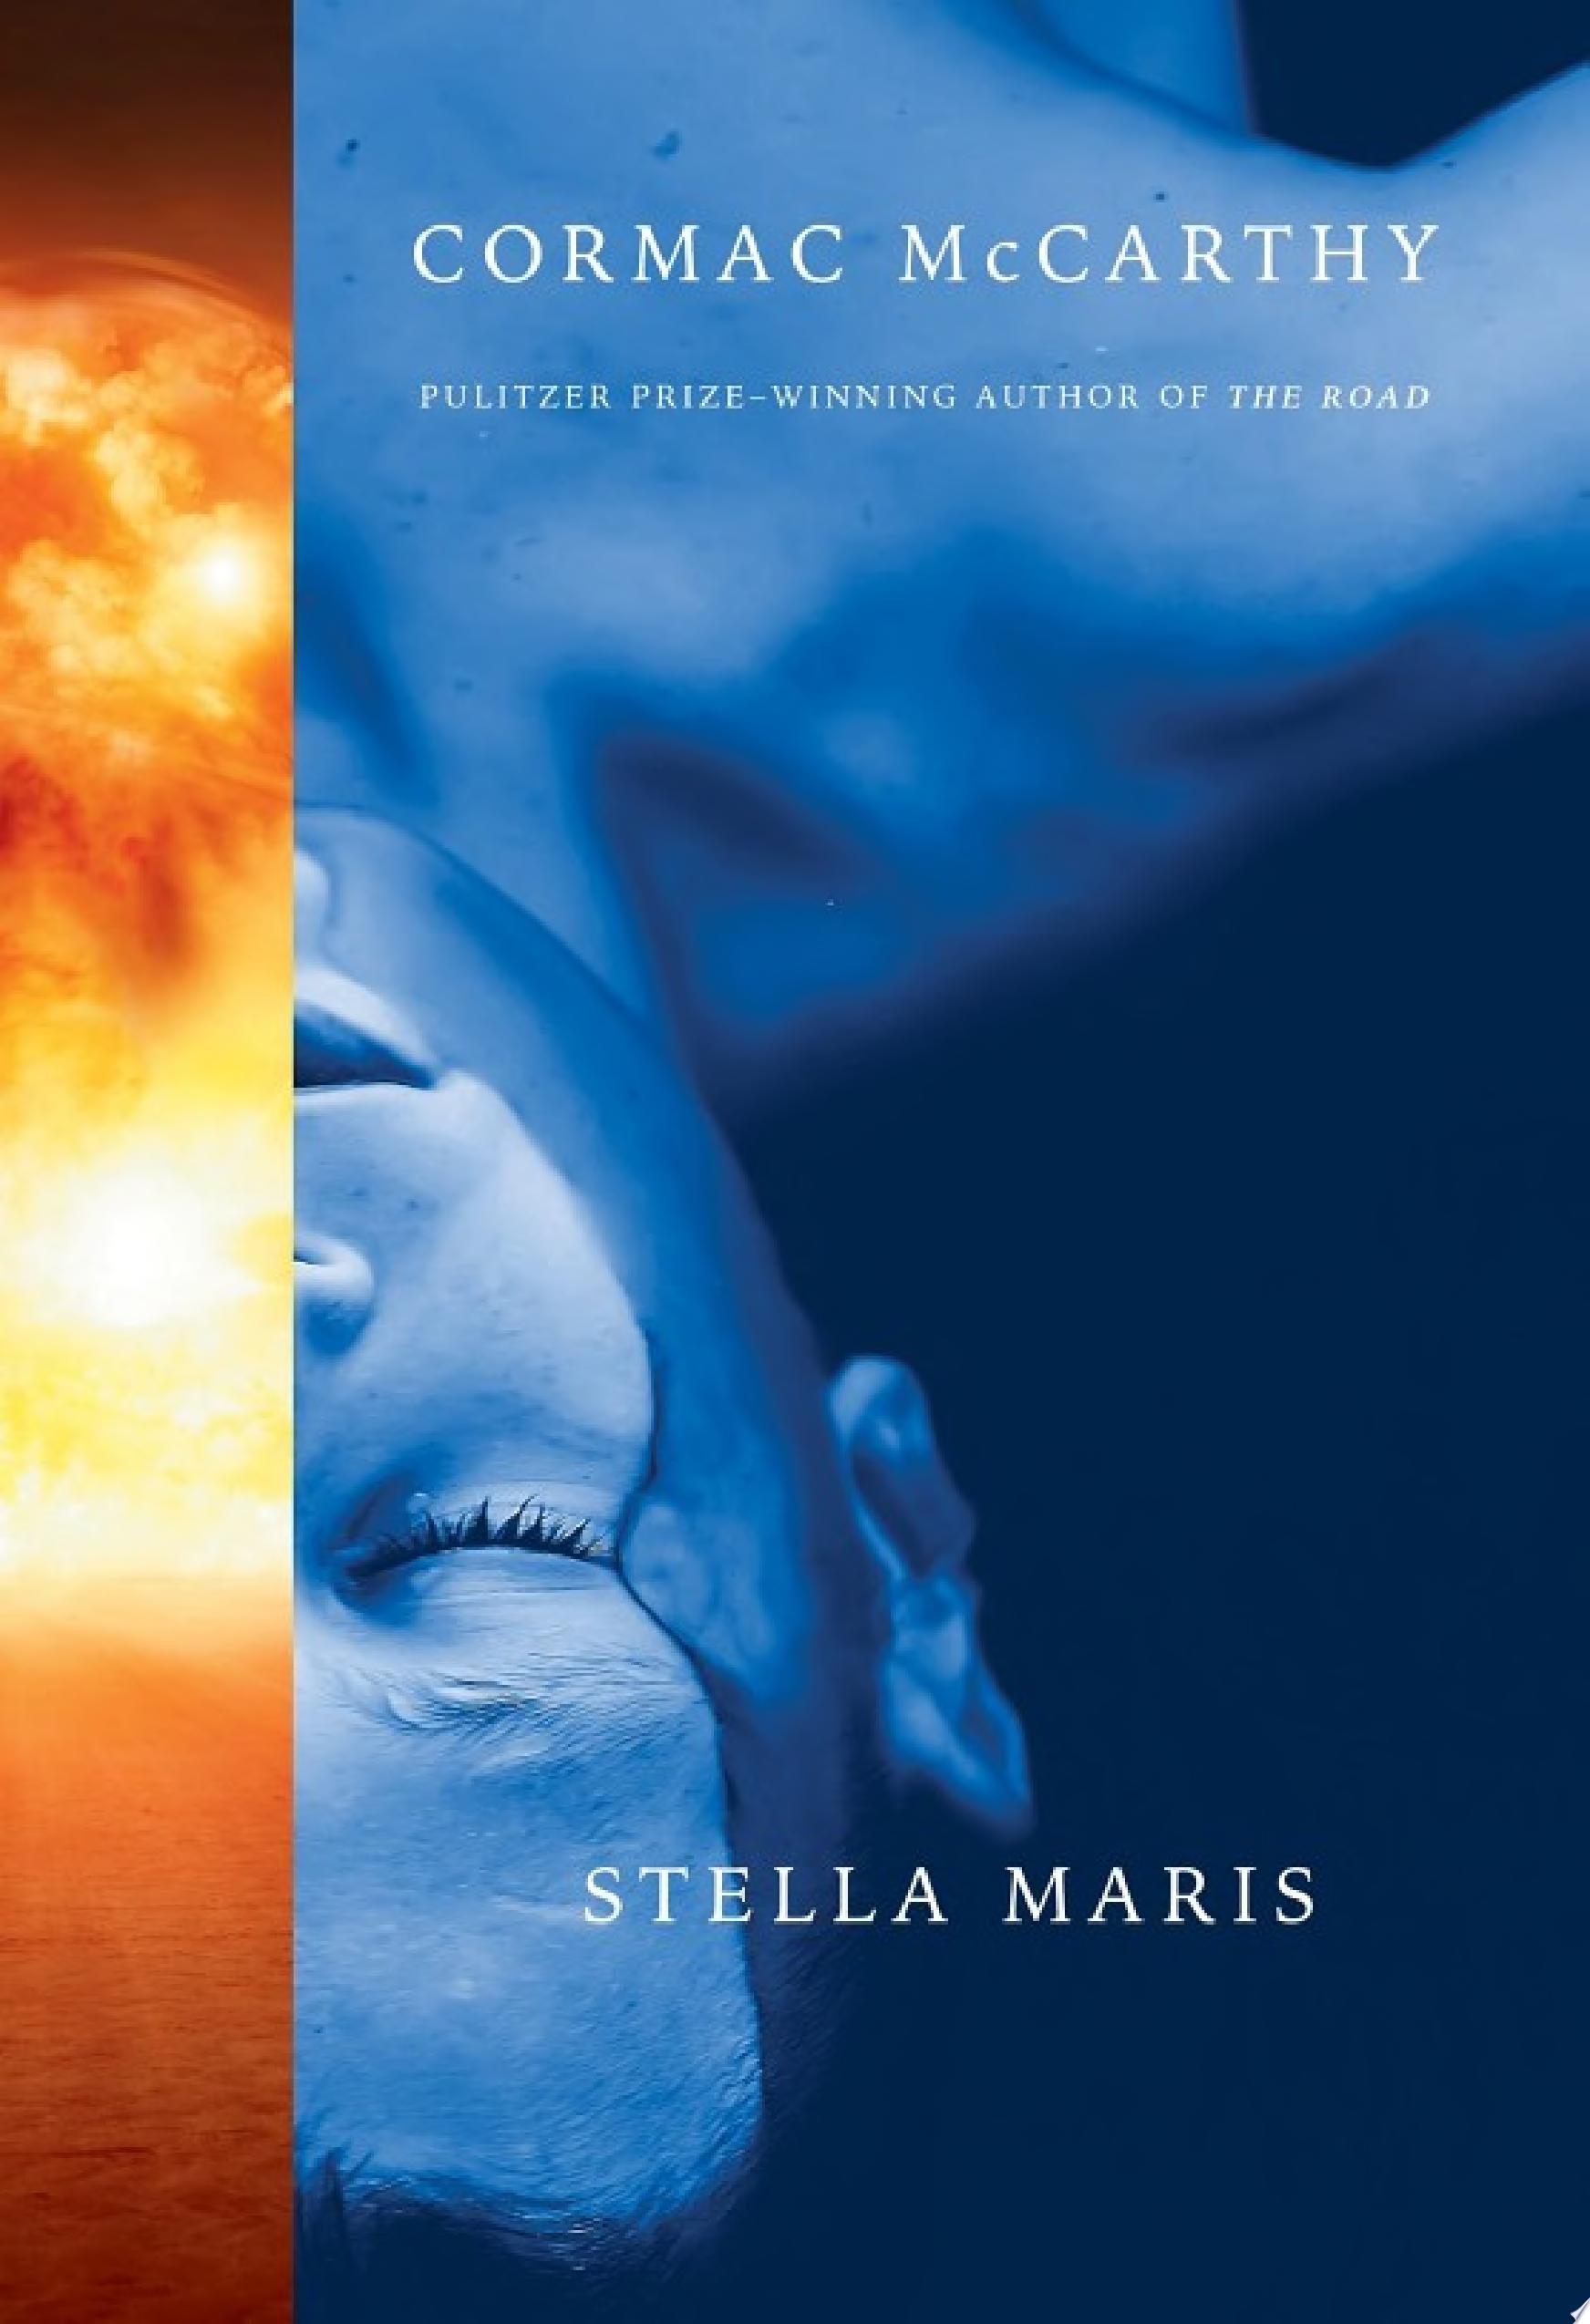 Image for "Stella Maris"